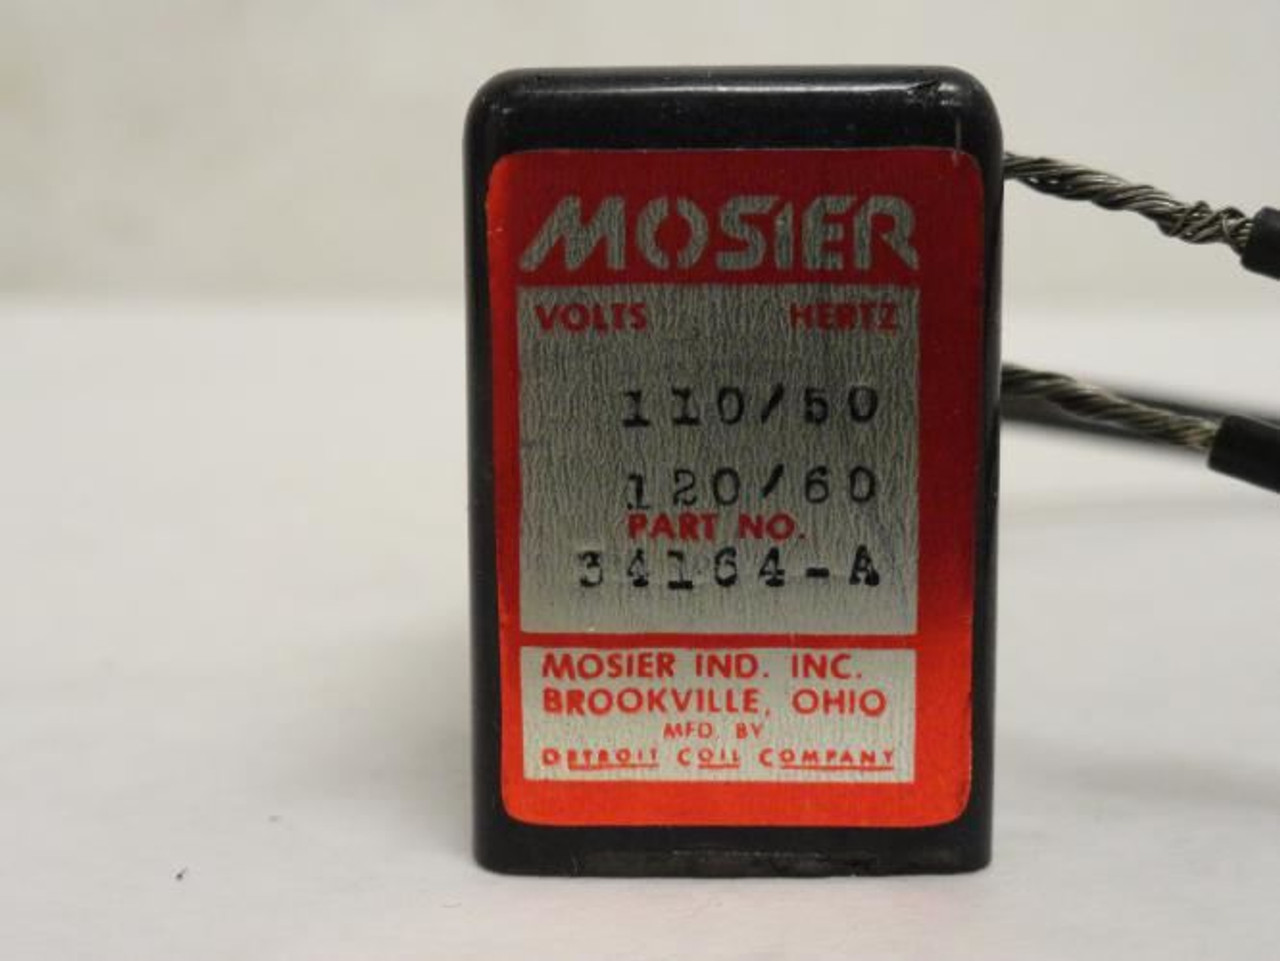 Mosier 34164-A; Solenoid Coil; 110/120V@50/60Hz